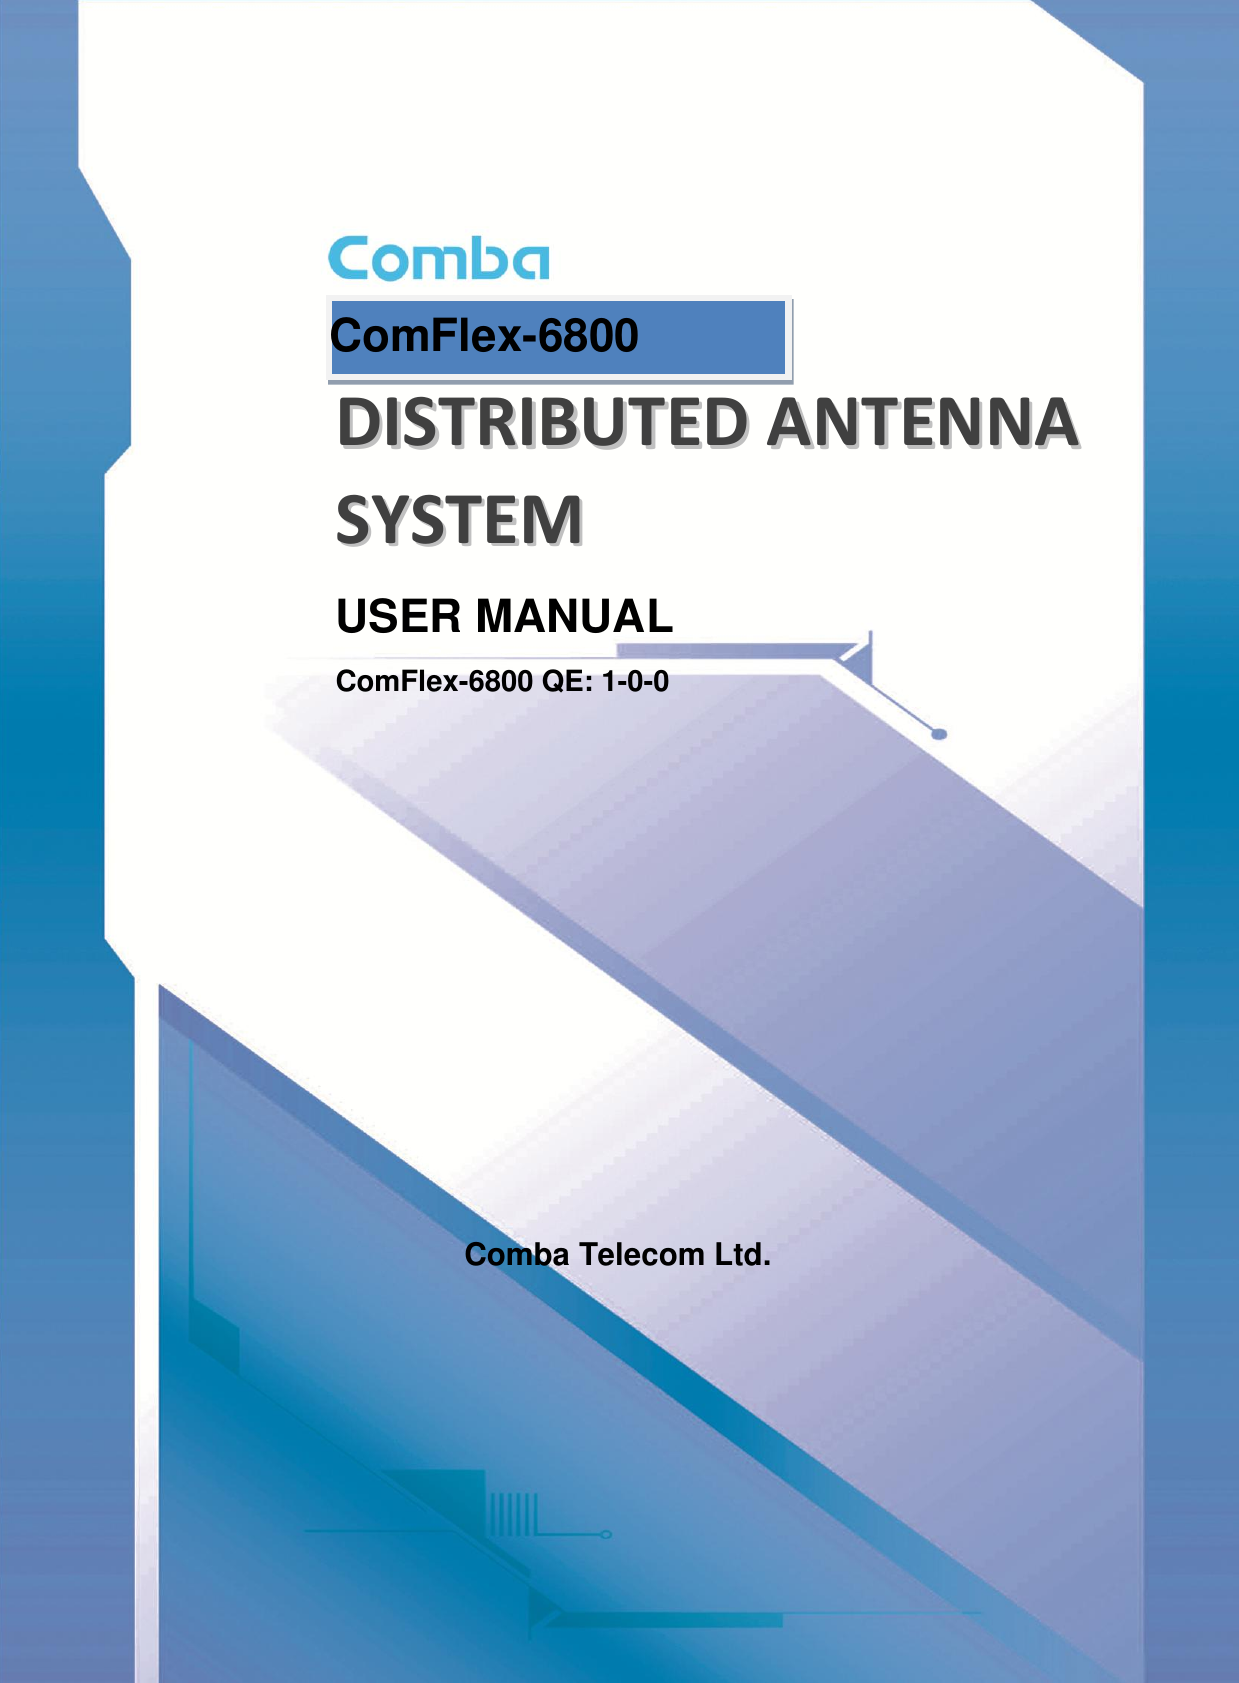          DDIISSTTRRIIBBUUTTEEDD  AANNTTEENNNNAA  SSYYSSTTEEMM  USER MANUAL ComFlex-6800 QE: 1-0-0            Comba Telecom Ltd. ComFlex-6800  